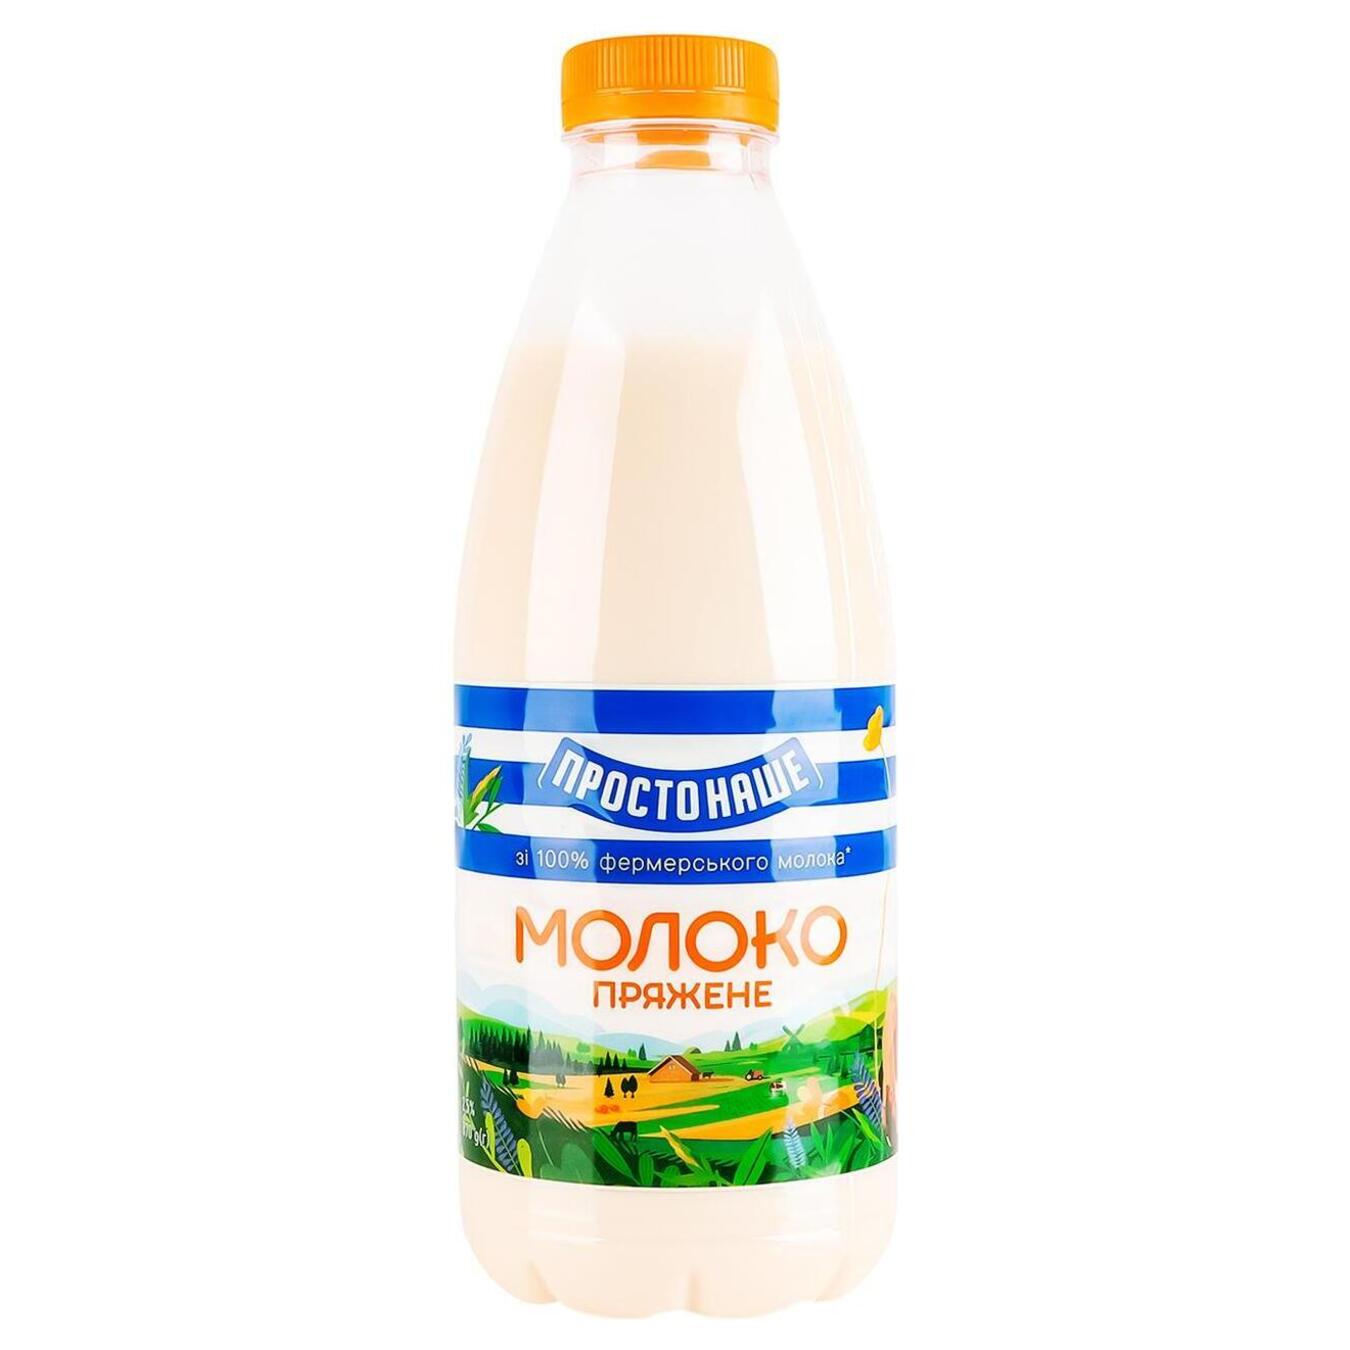 Sprouted milk Prostonashe 2.5% pet 870